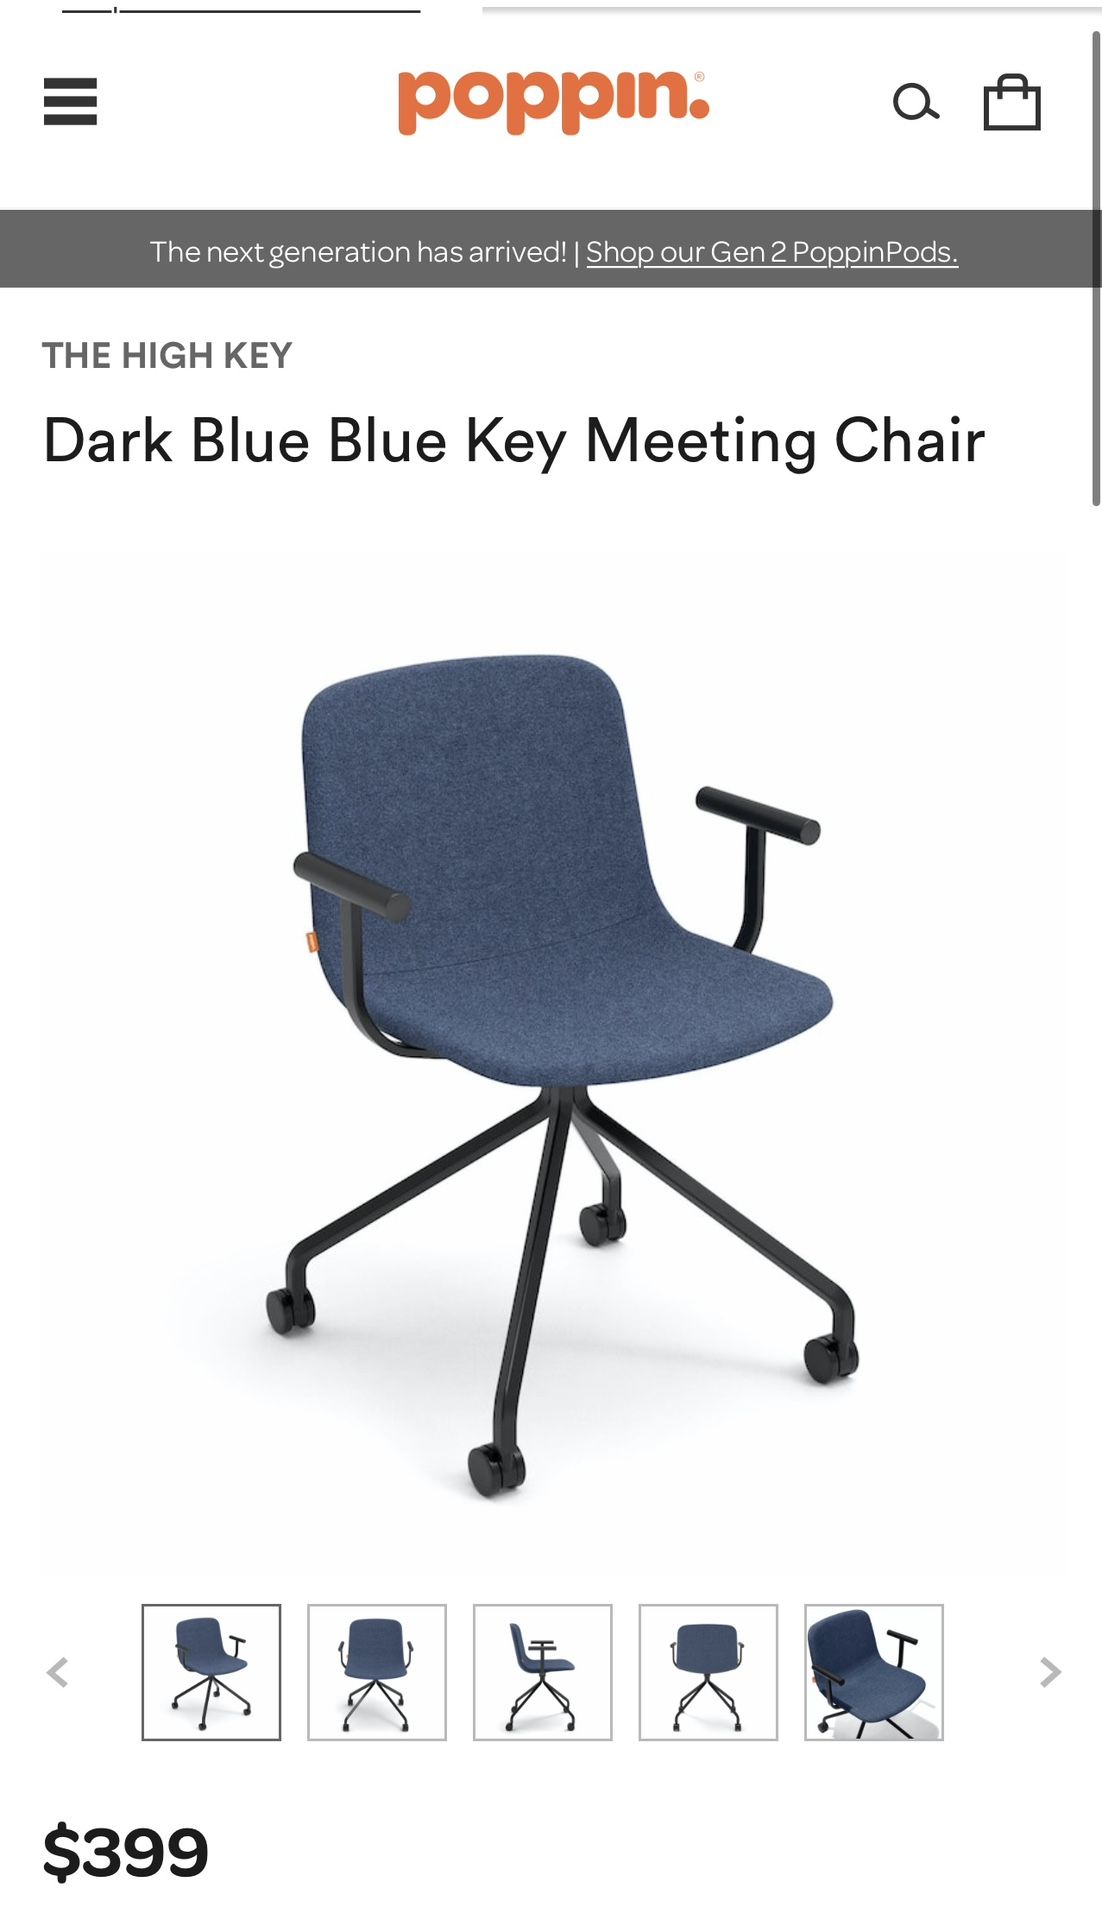 Key Meeting Chair Poppin Brand 